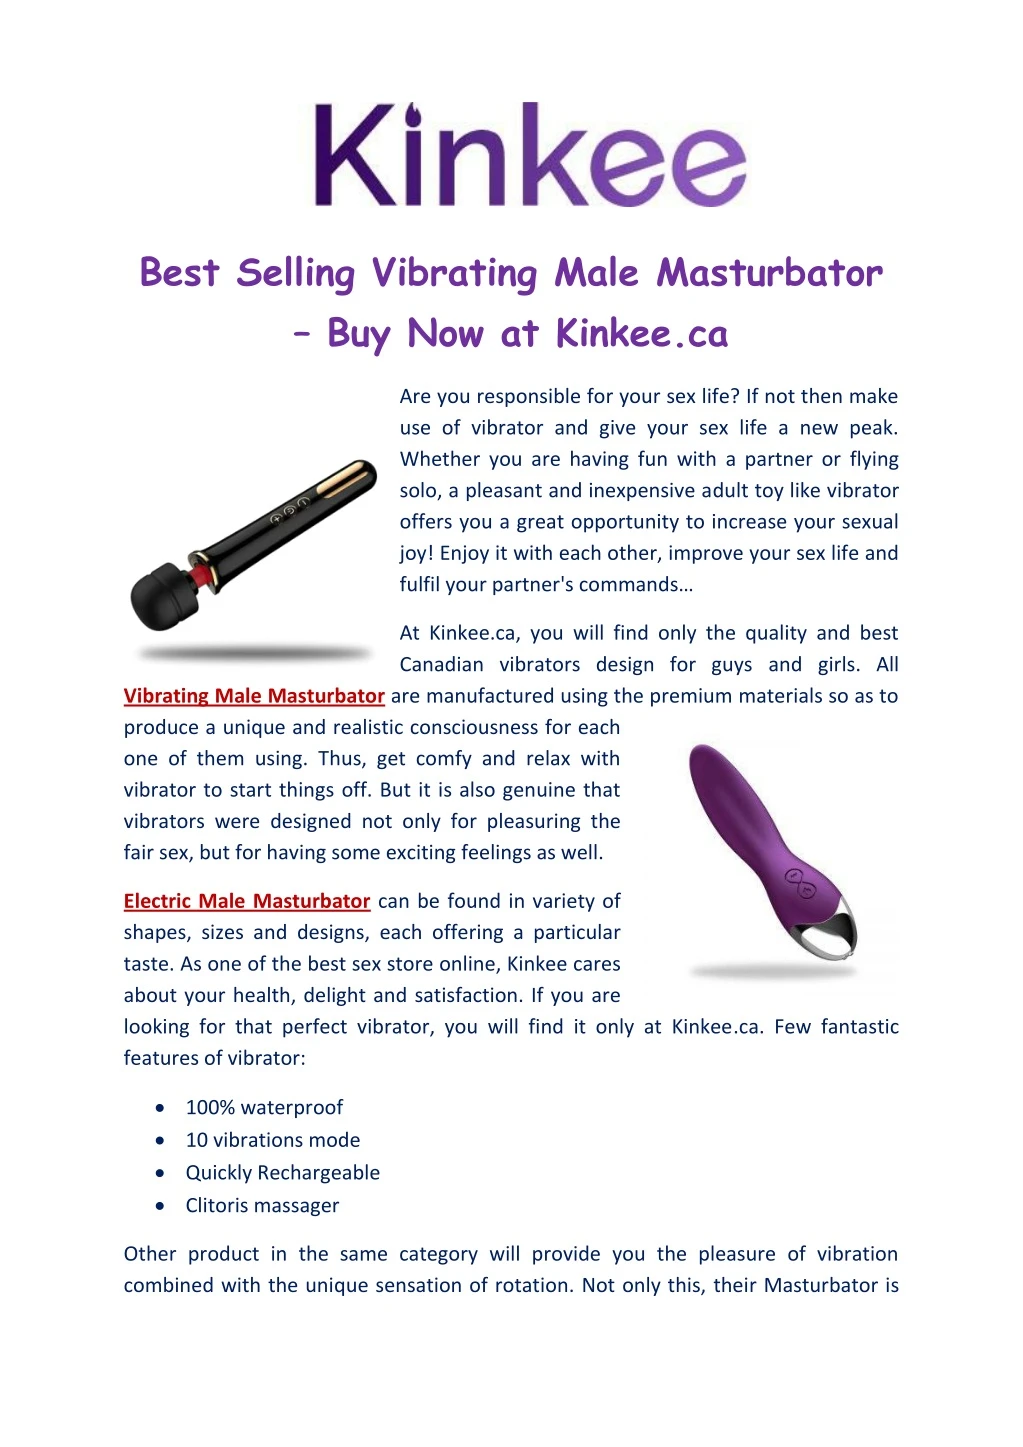 best selling vibrating male masturbator